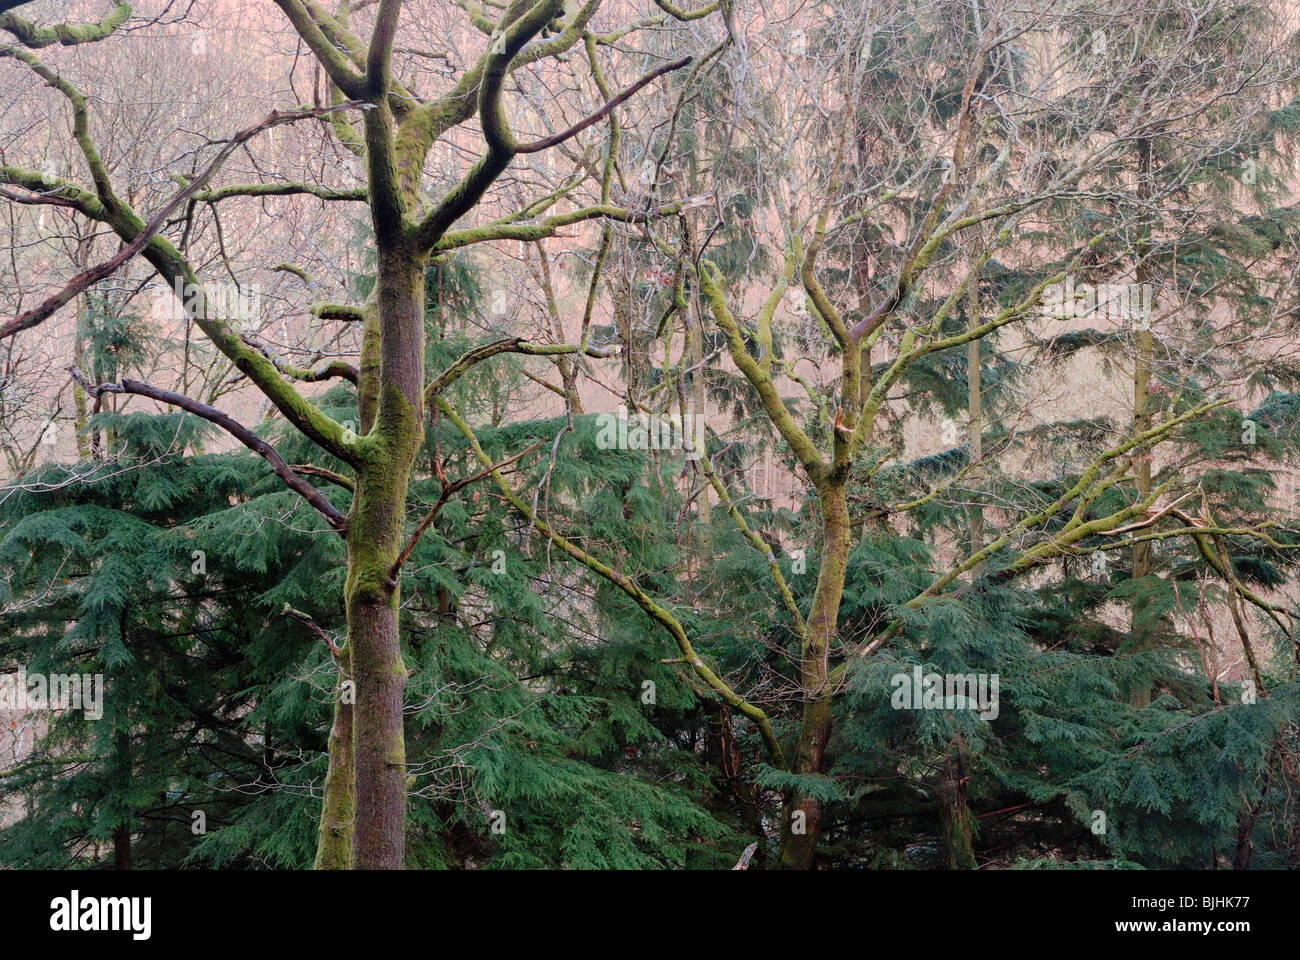 Western Hemlock, Tsuga heterophylla piantata in un antico bosco di querce, Galles. Foto Stock